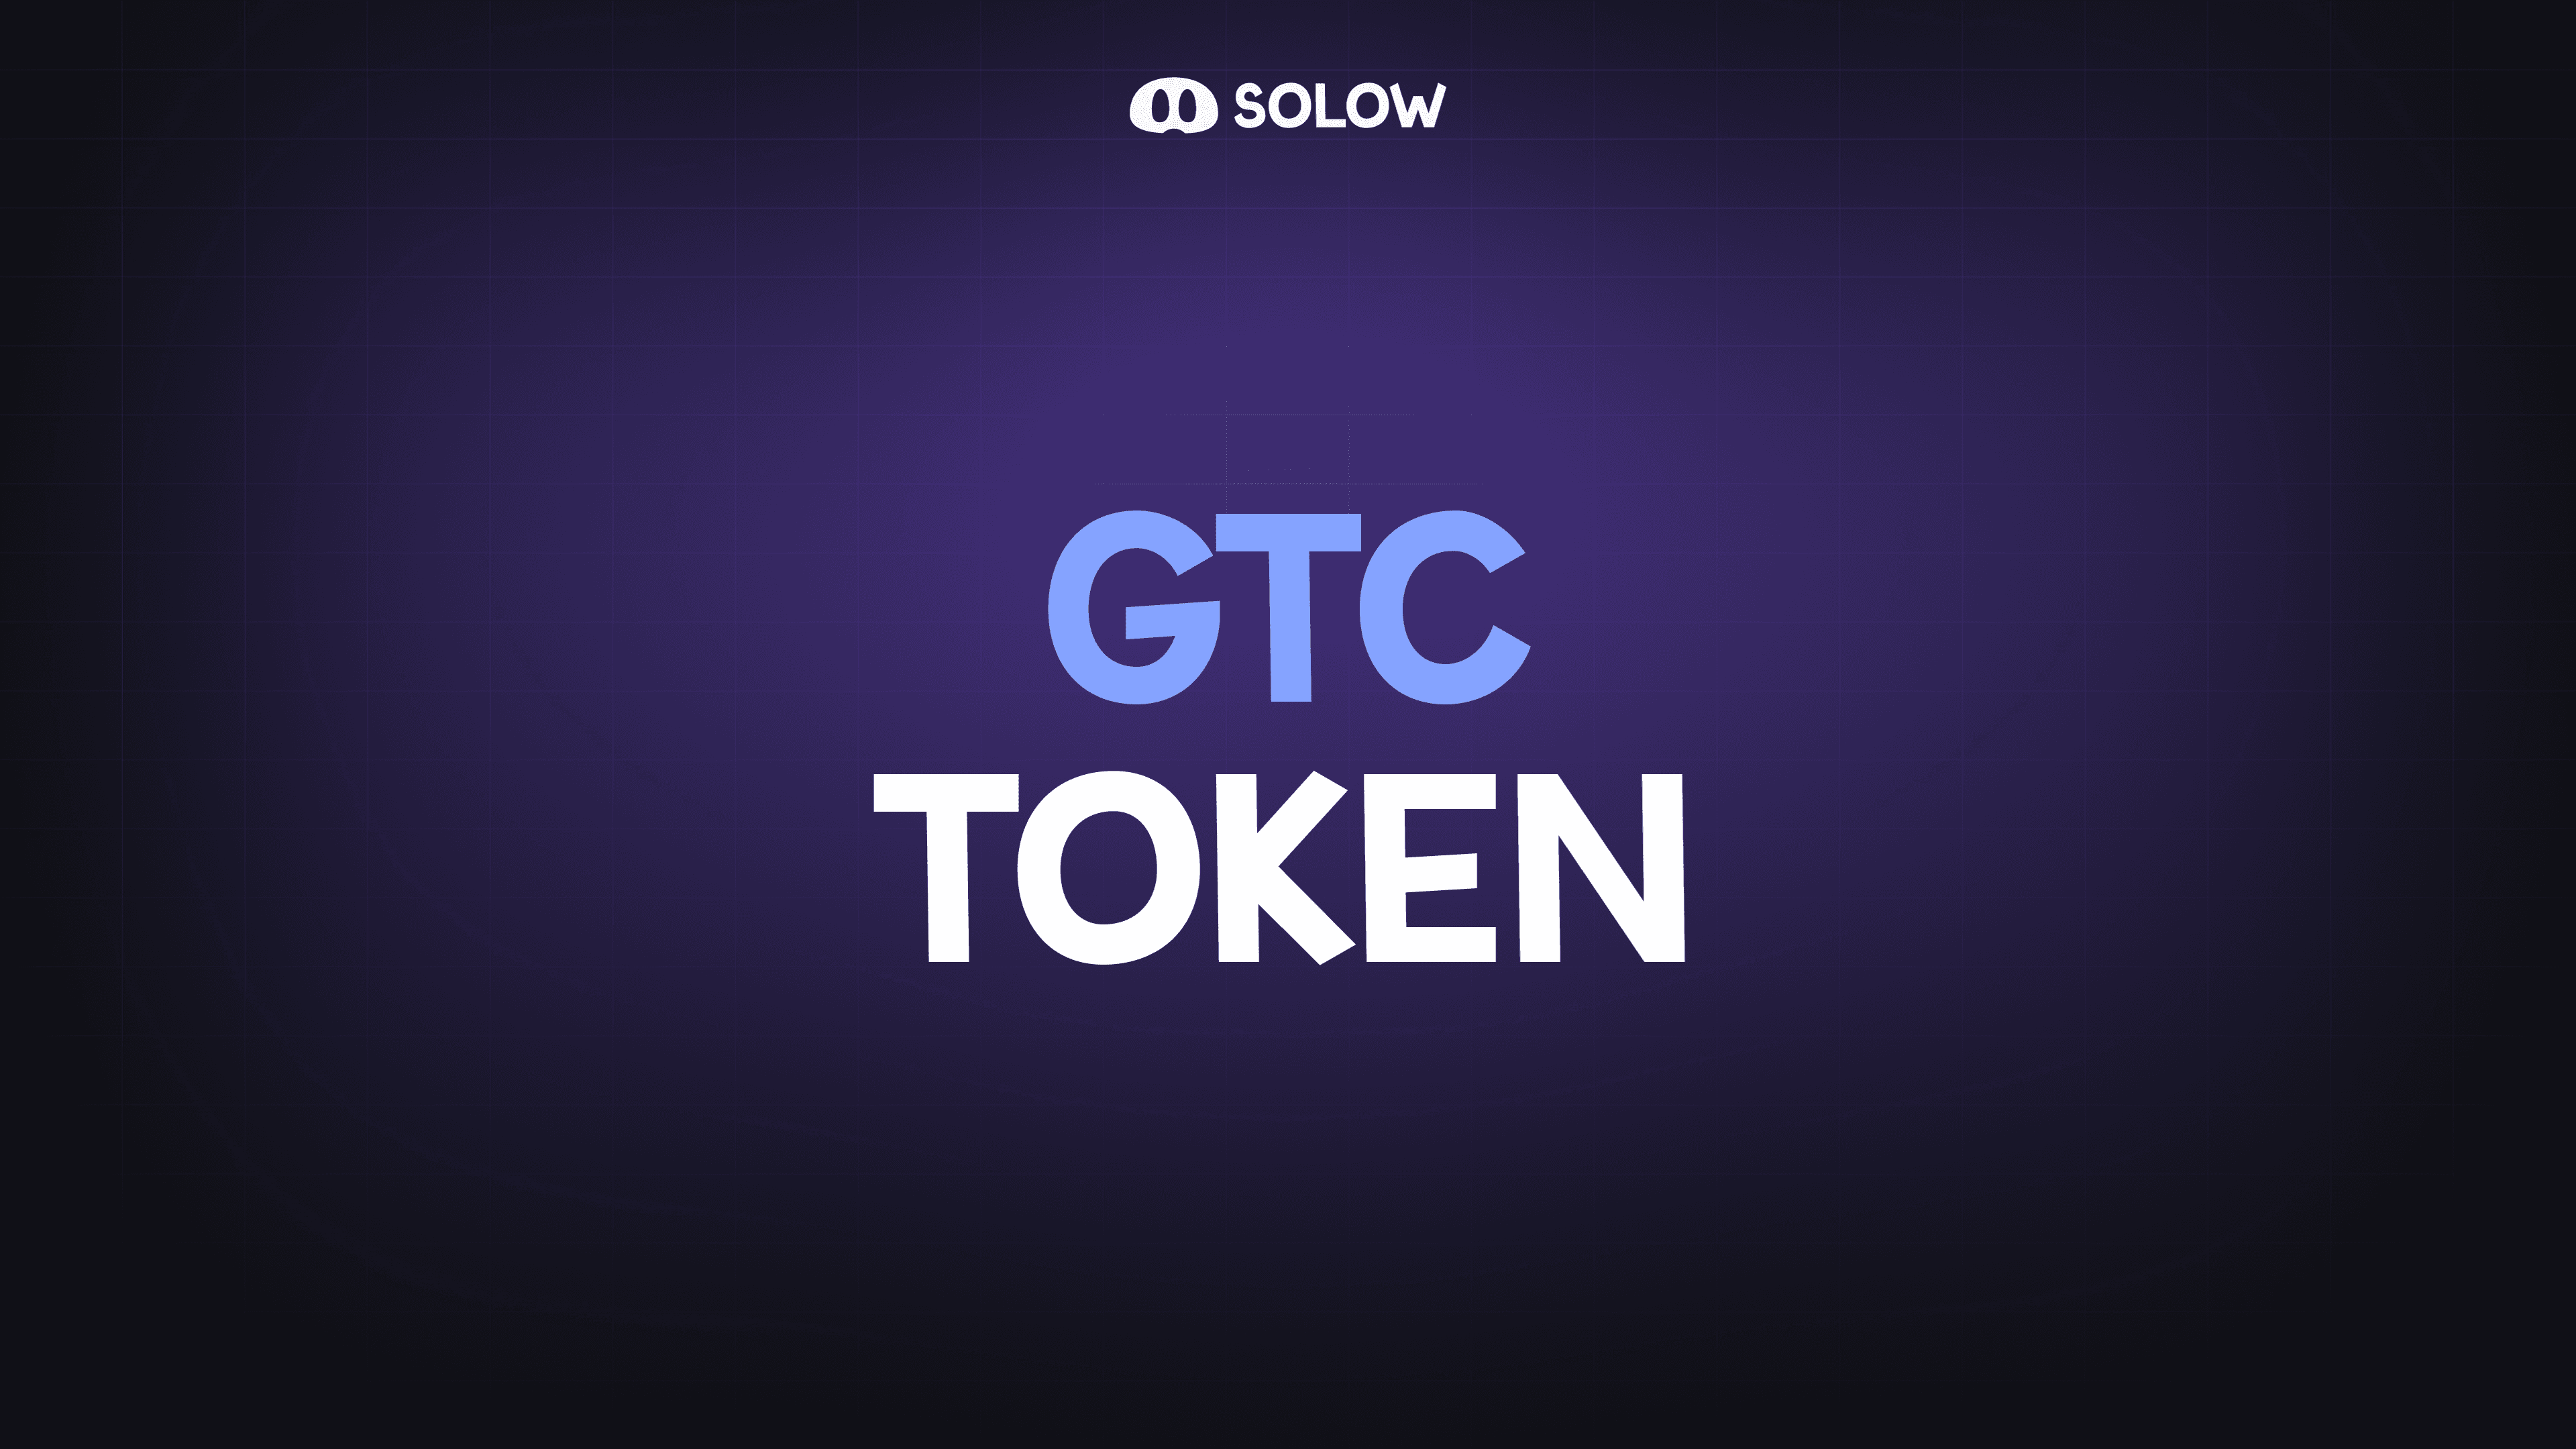 GTC Token